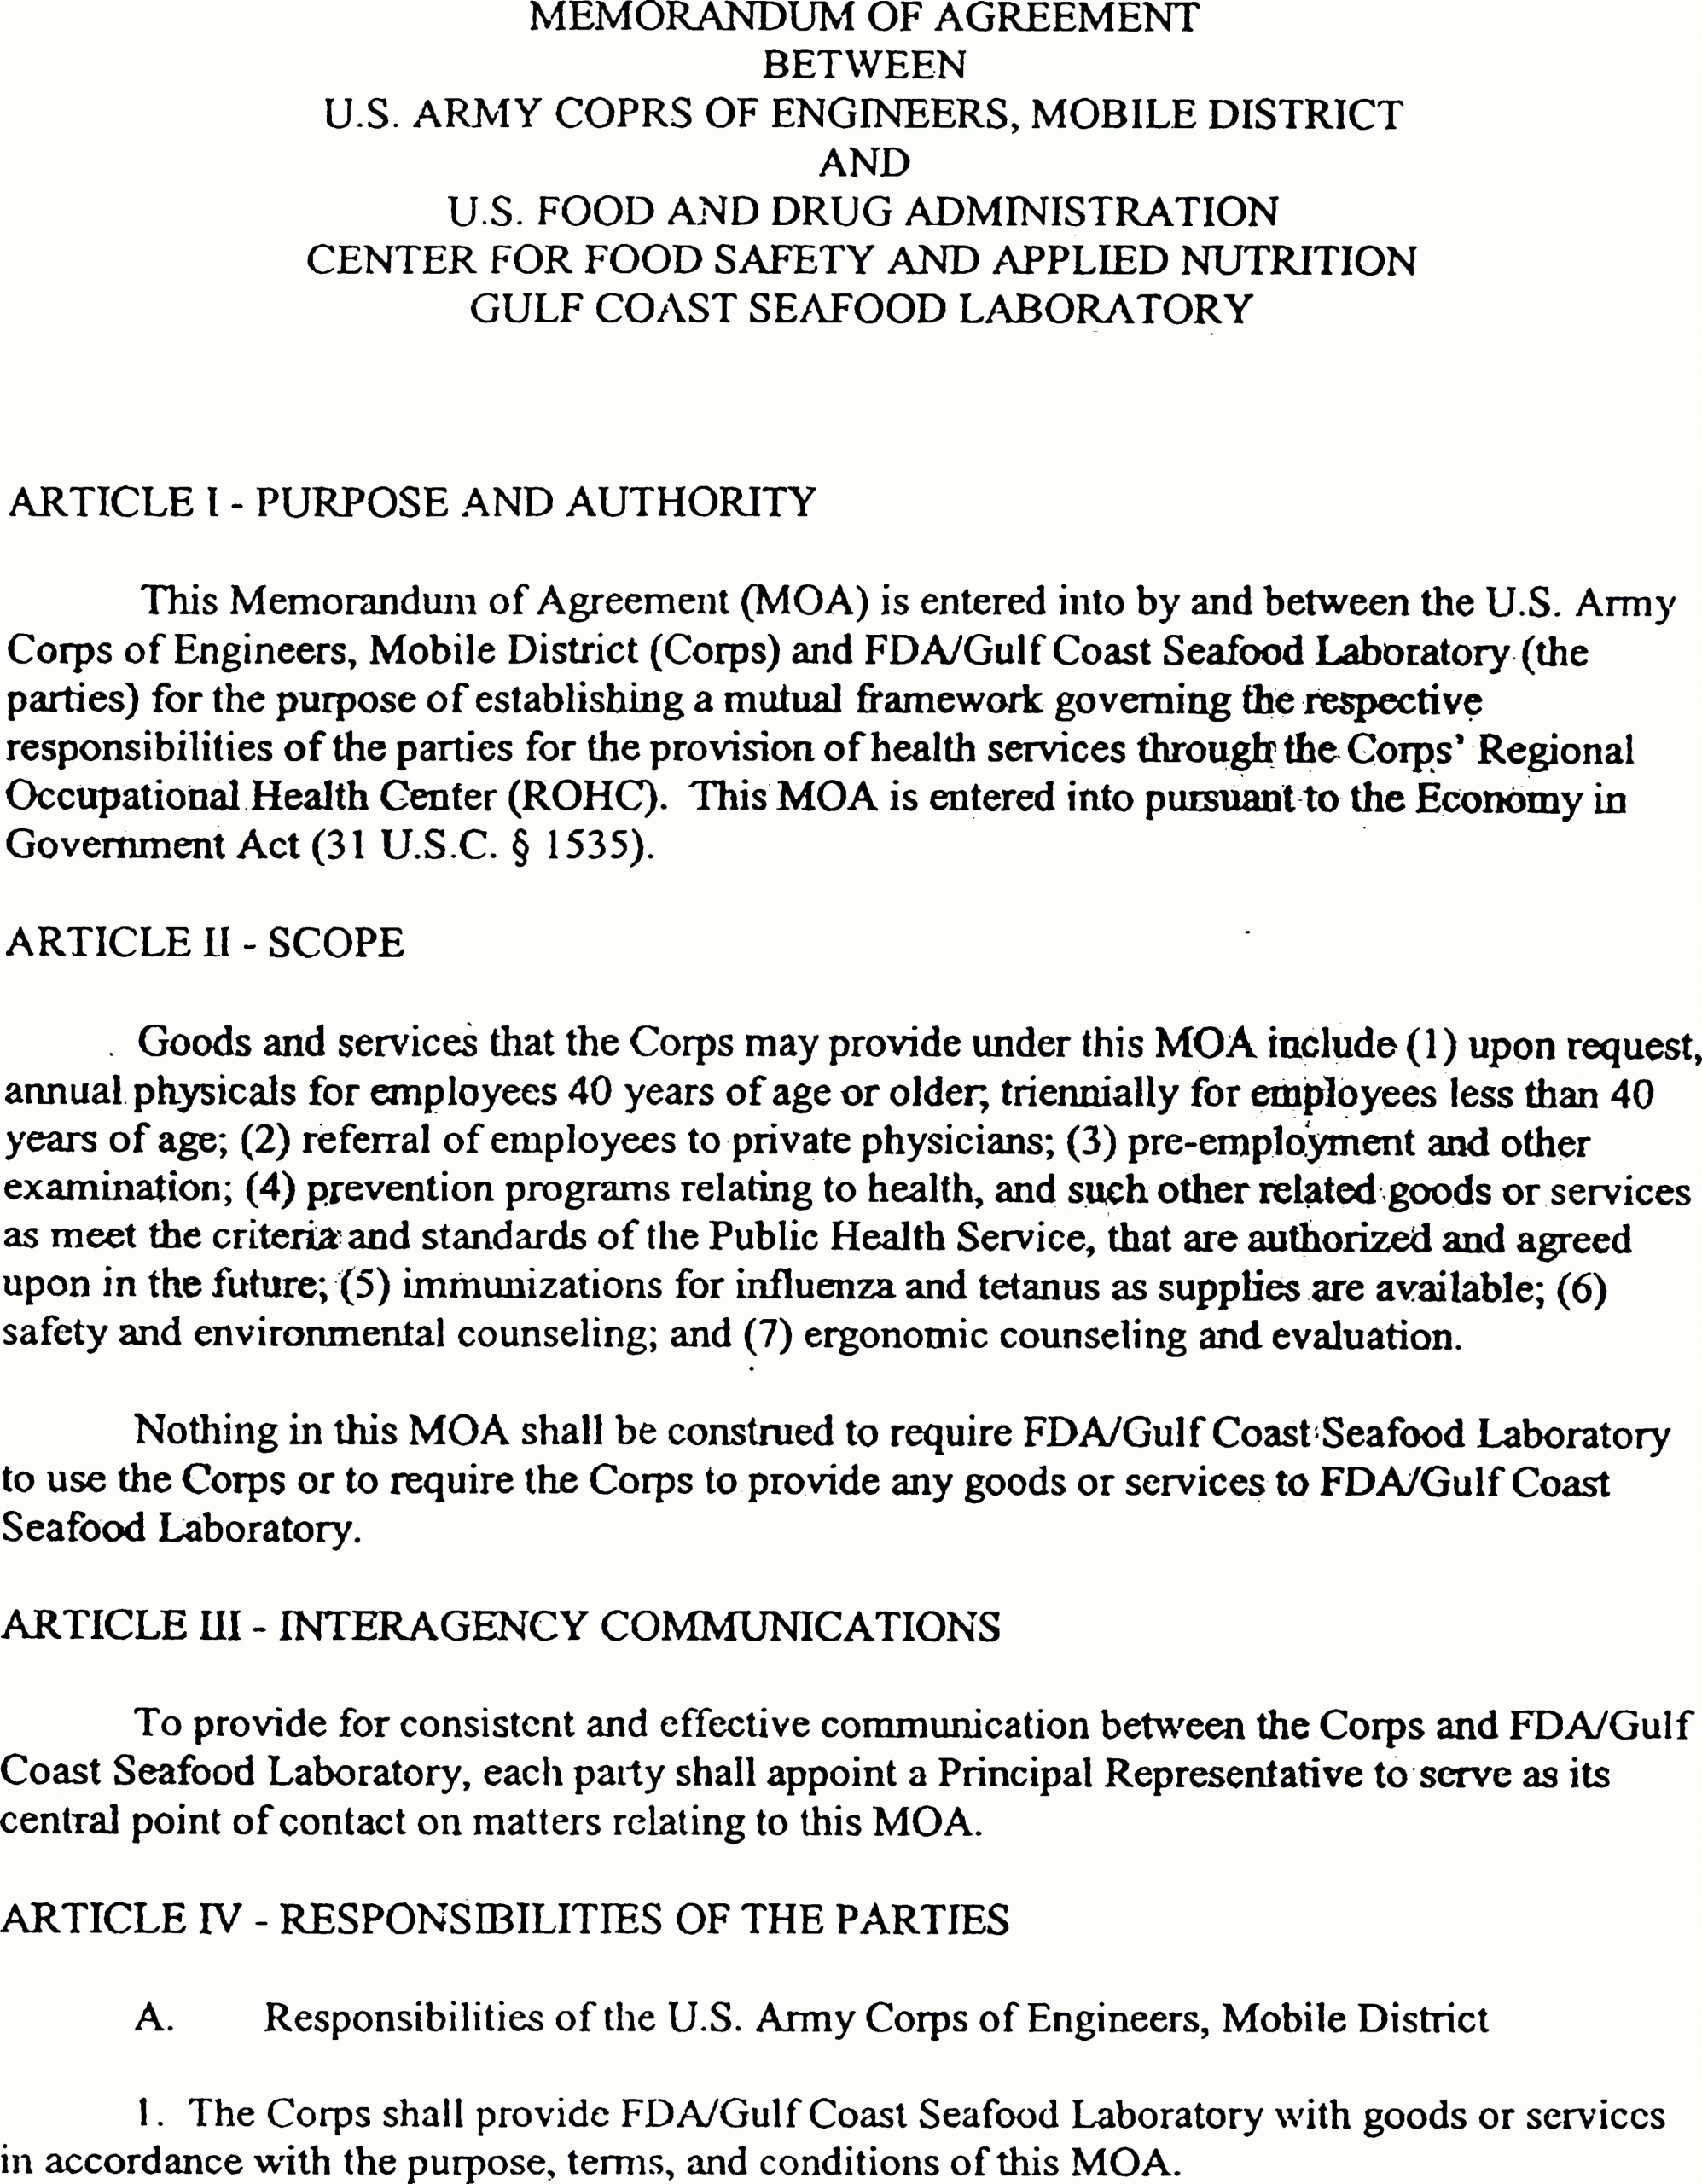 Federal Register | Memorandum Of Understanding With The U.s. Army Corps In Memorandum Of Agreement Template Army